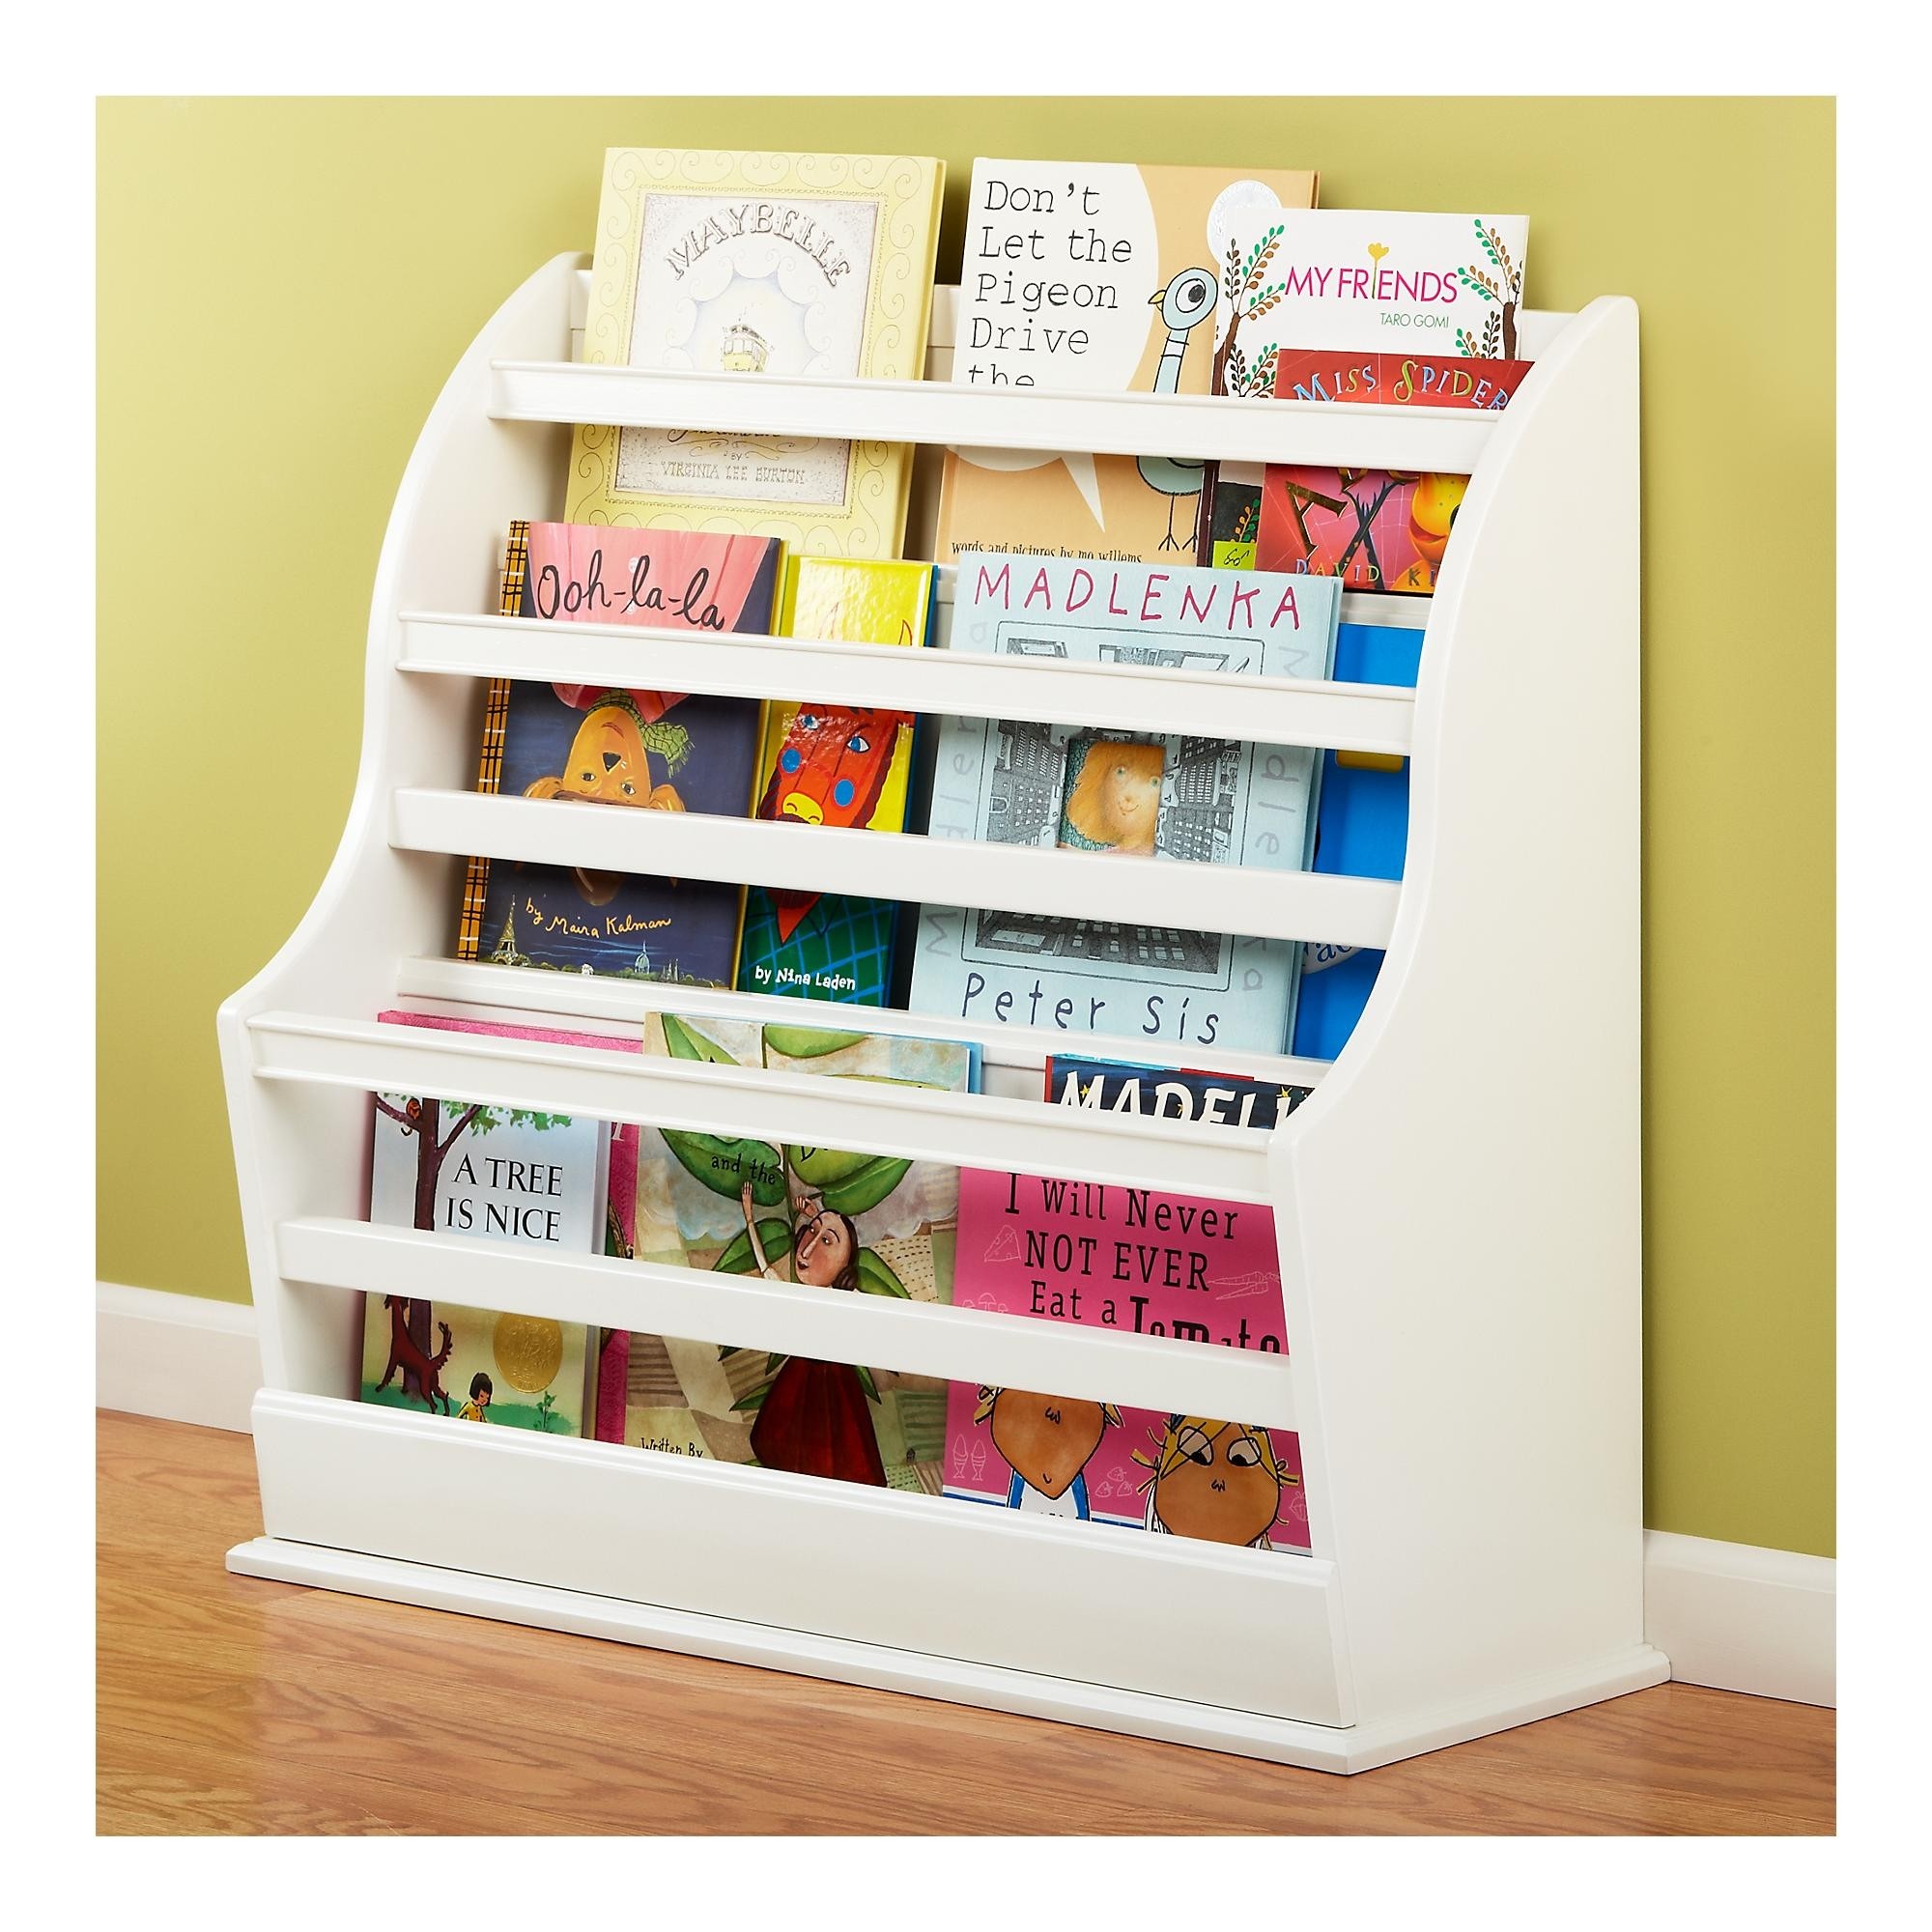 childrens bookcase